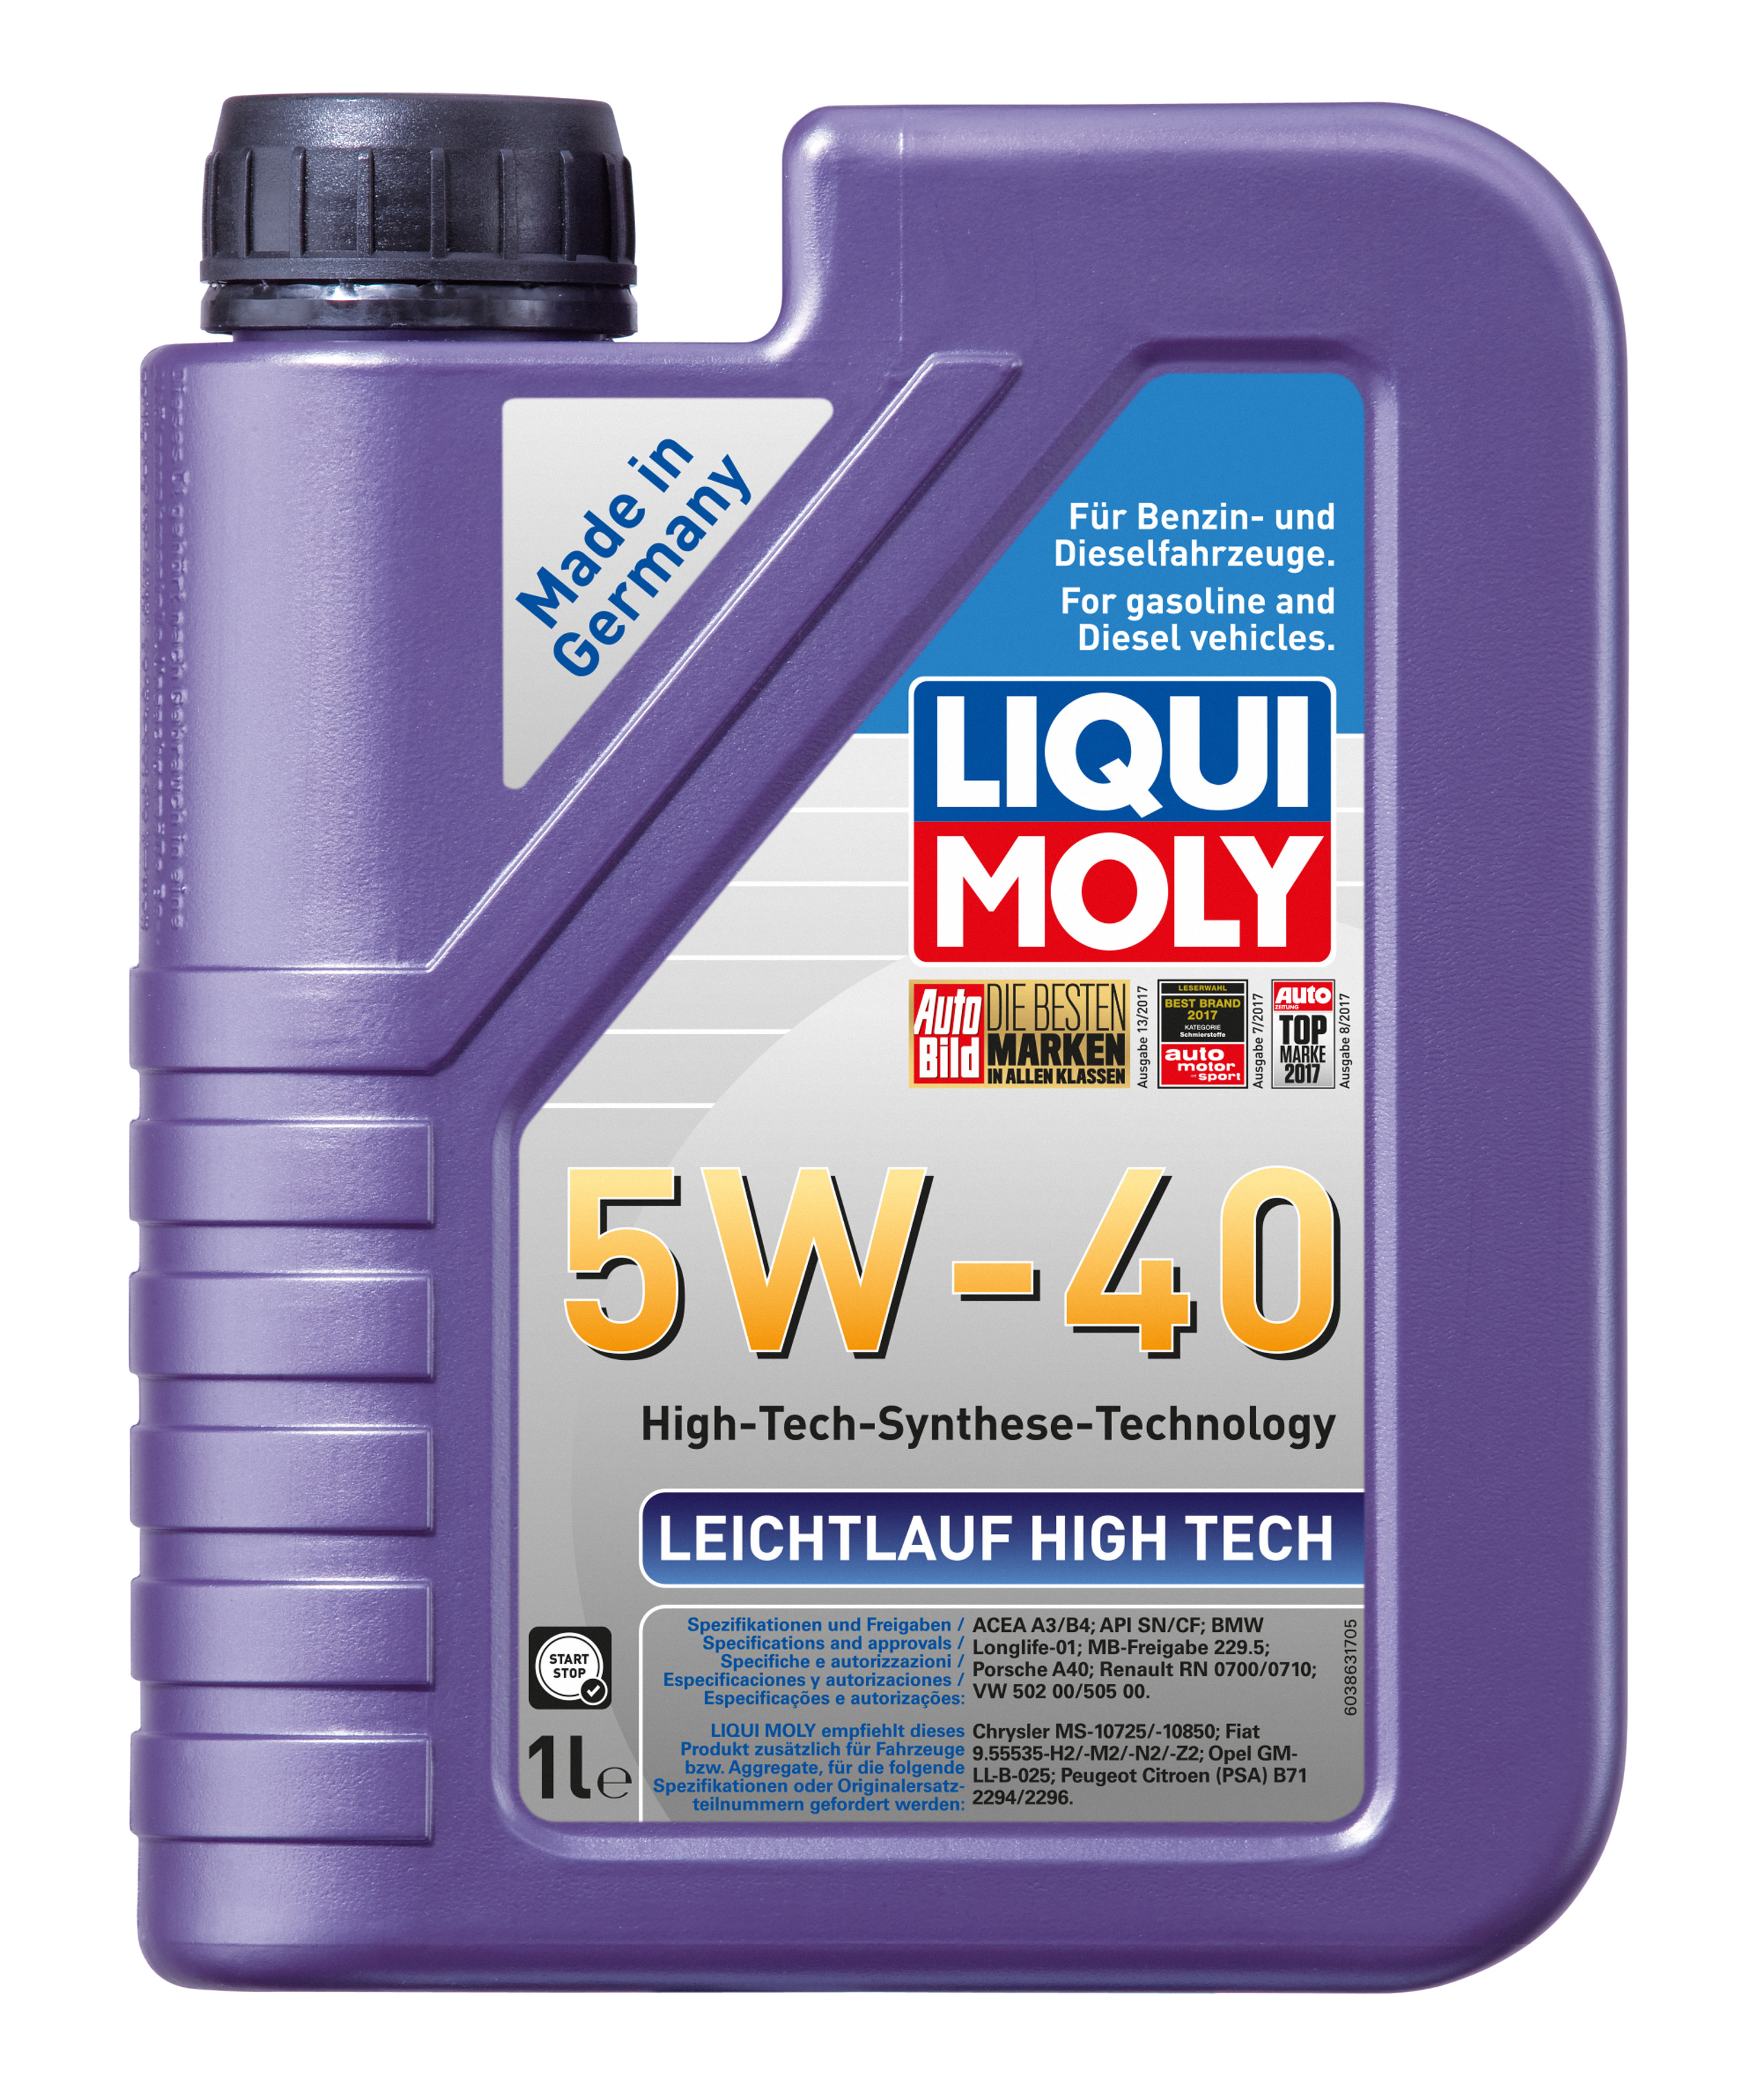 Leichtlauf High Tech 5W-40 1L LIQUI MOLY 2327